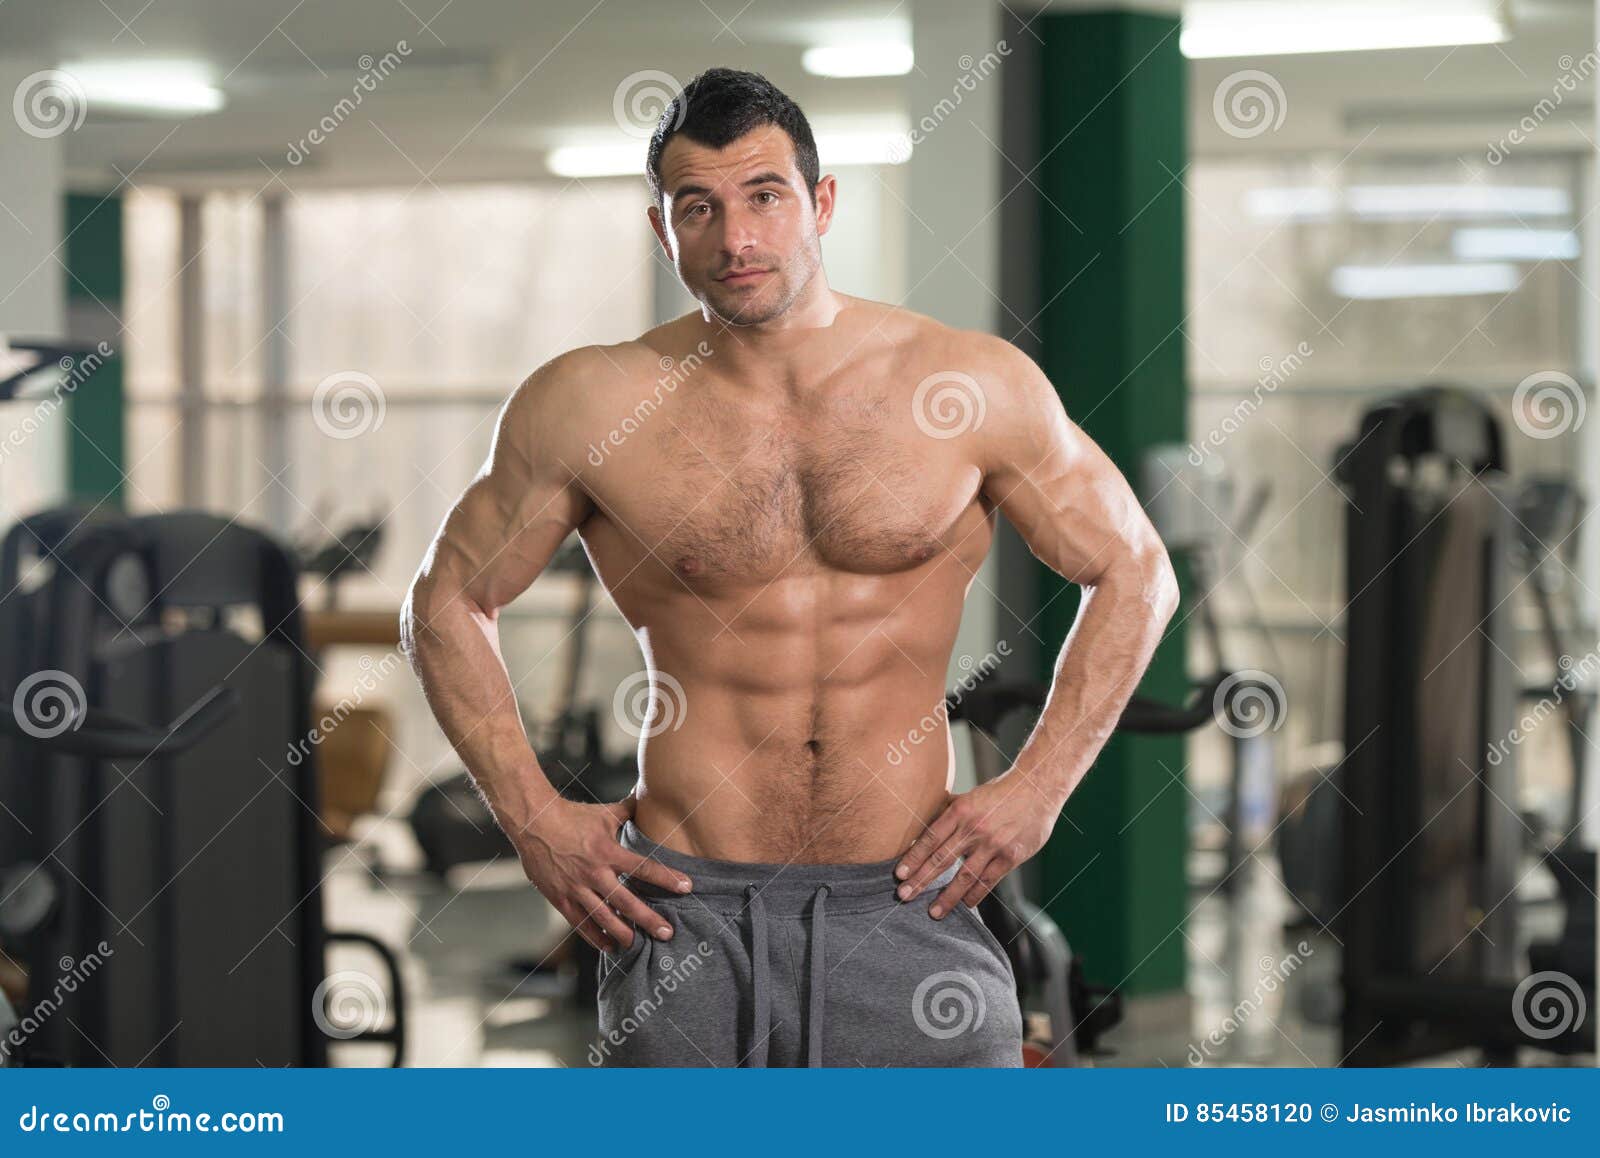 Men hairy muscle MEN2MEN •